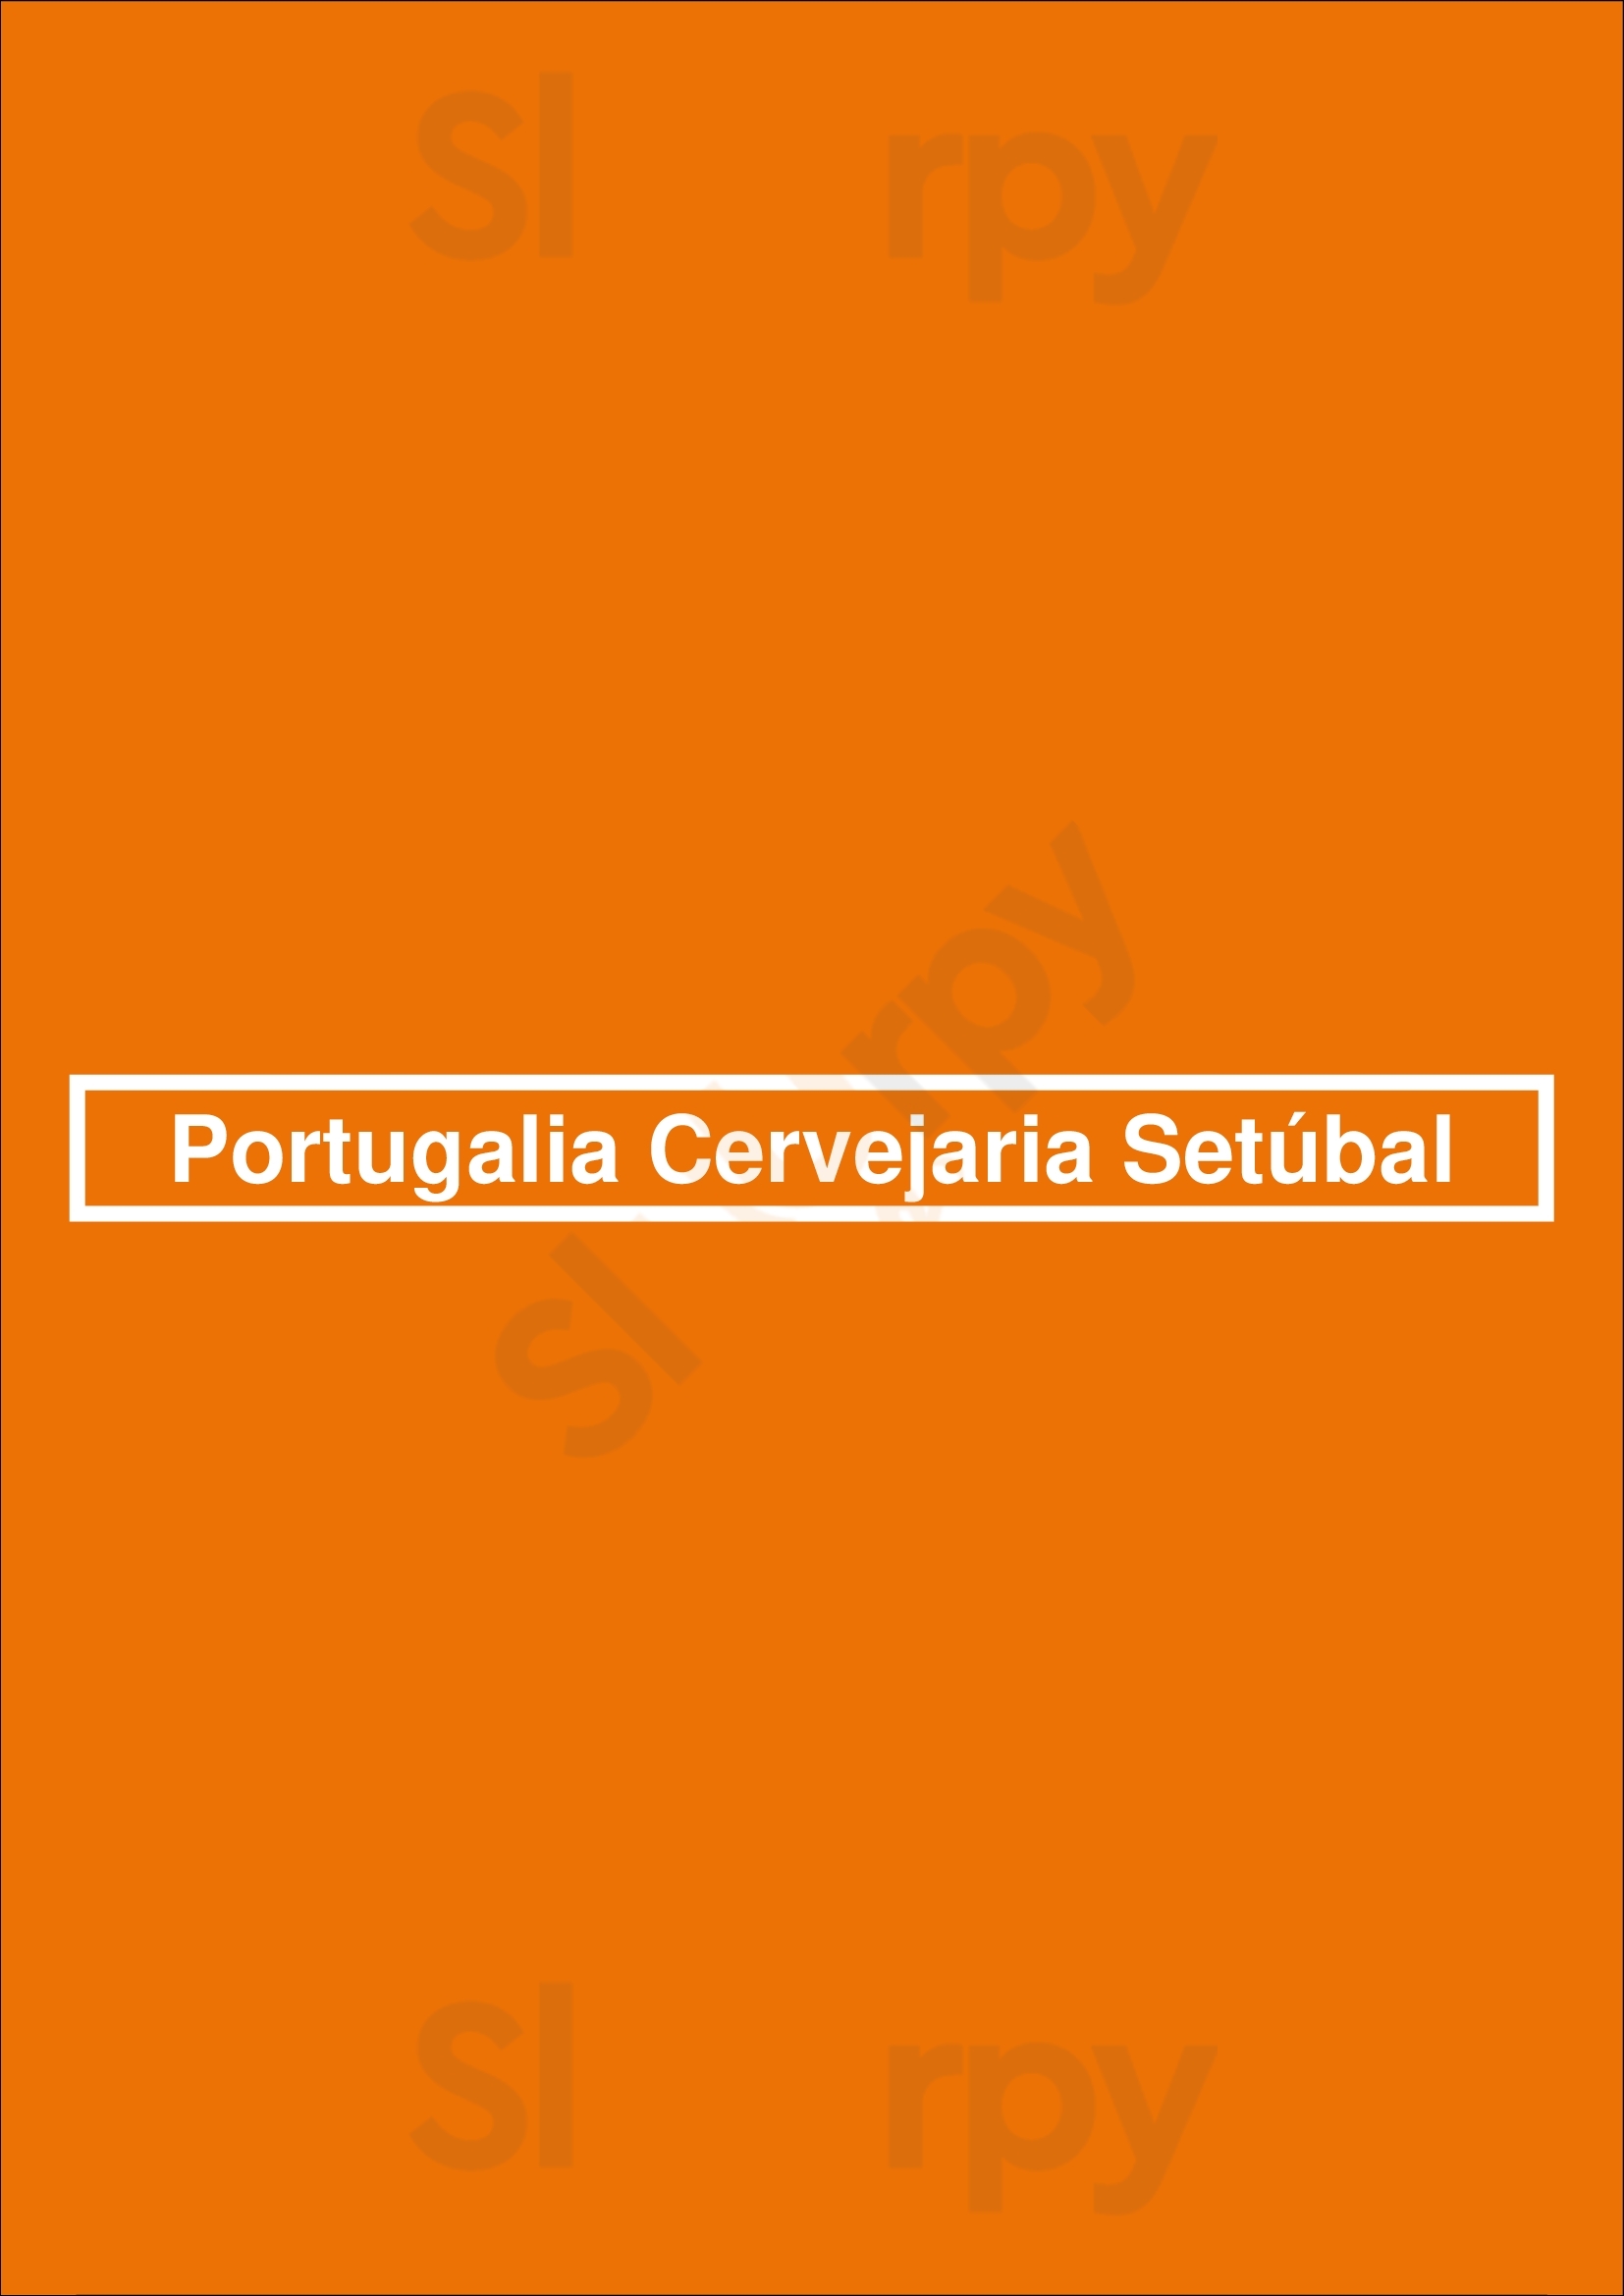 Portugalia Cervejaria Setúbal Setúbal Menu - 1